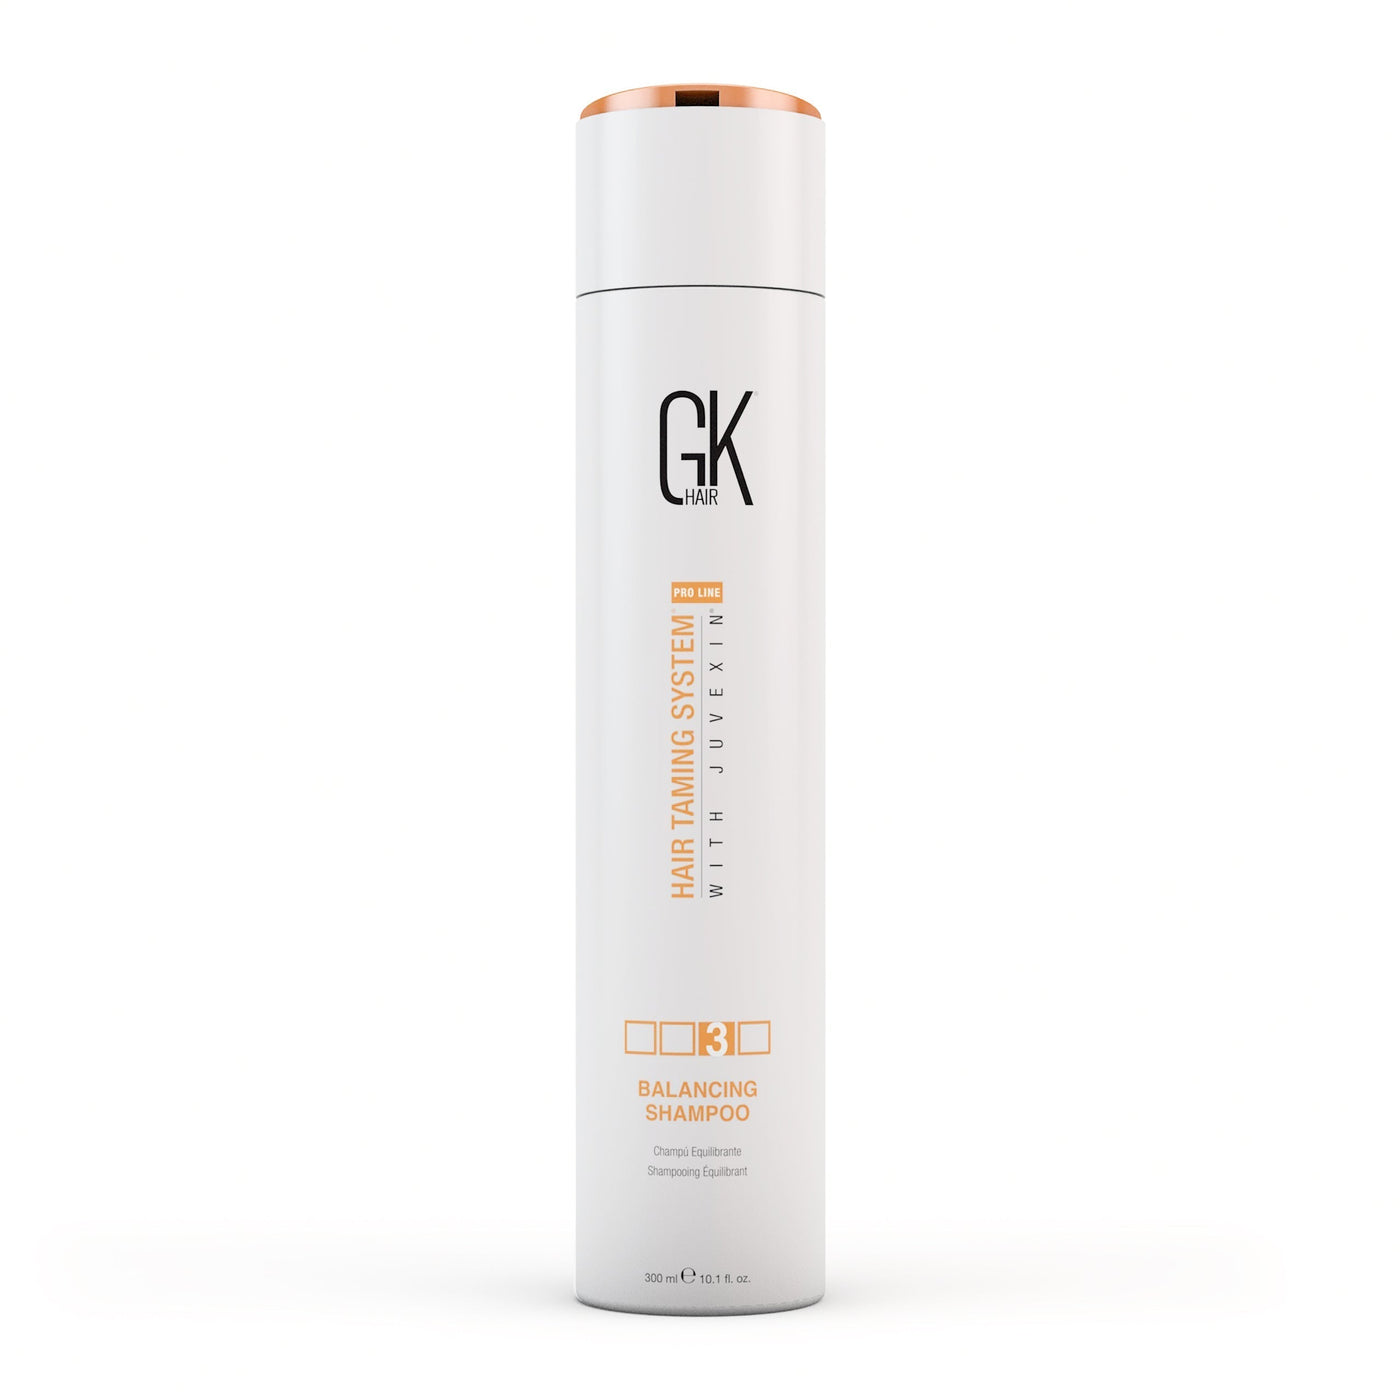 GK Hair Oily Hair Shampoo - Enjoy Best Balancing Shampoo with Cleanse Sensor